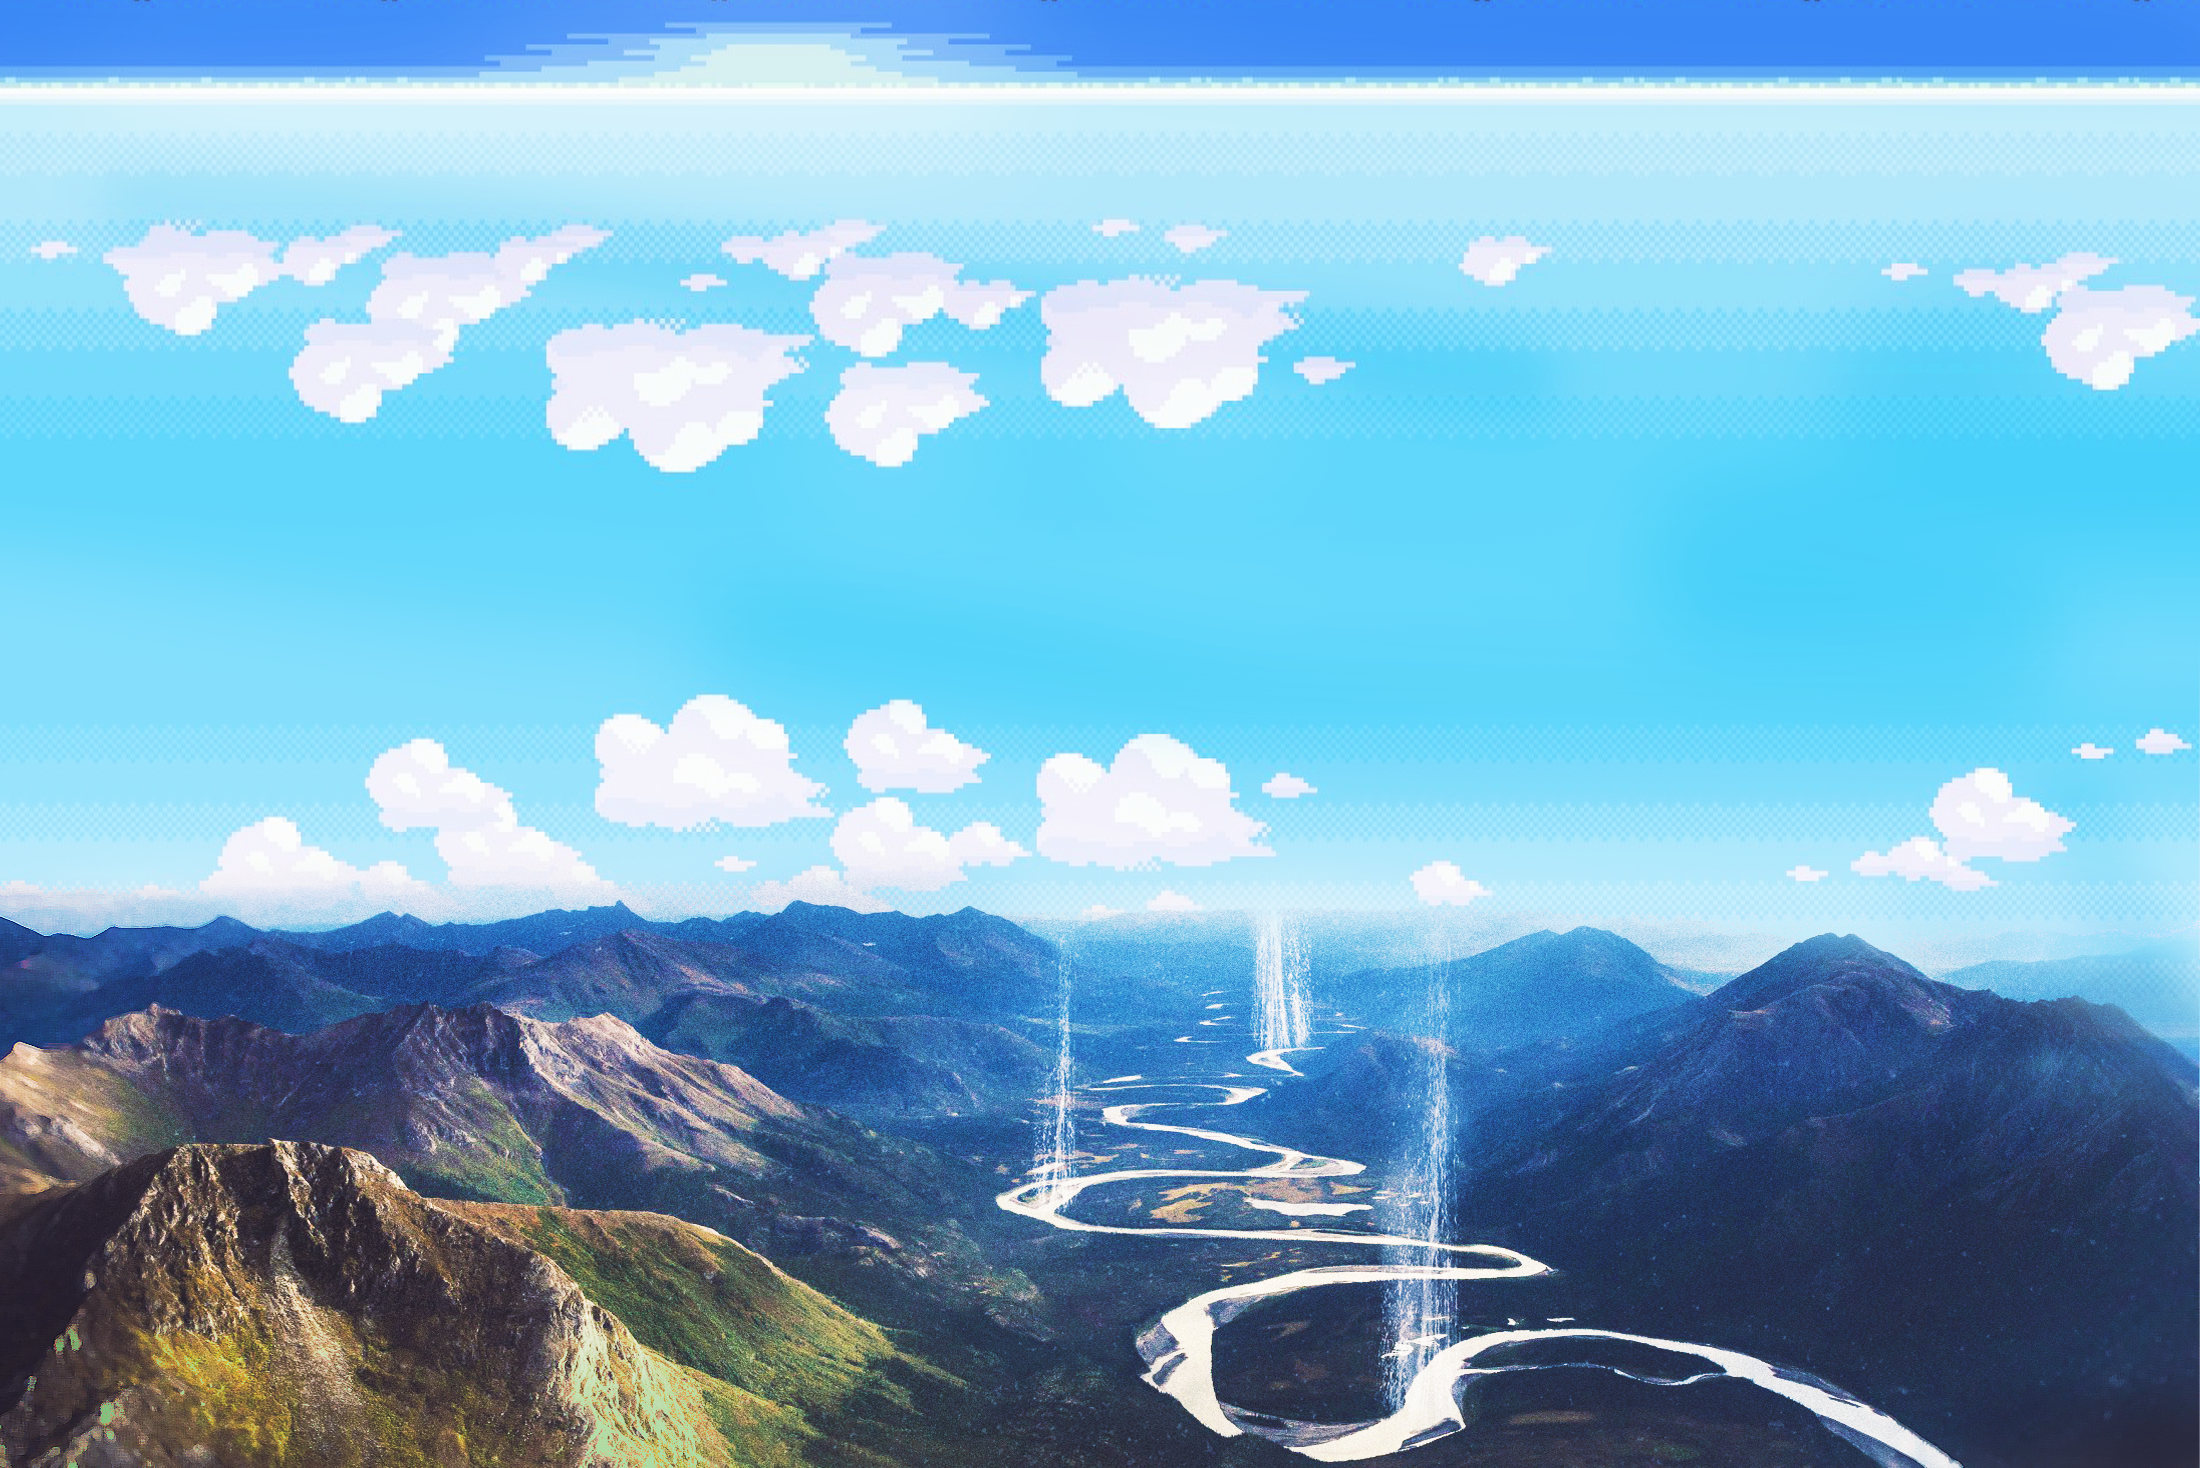 General 2200x1468 mountains sky 8-bit 16-bit Gravity landscape Pokémon cyan